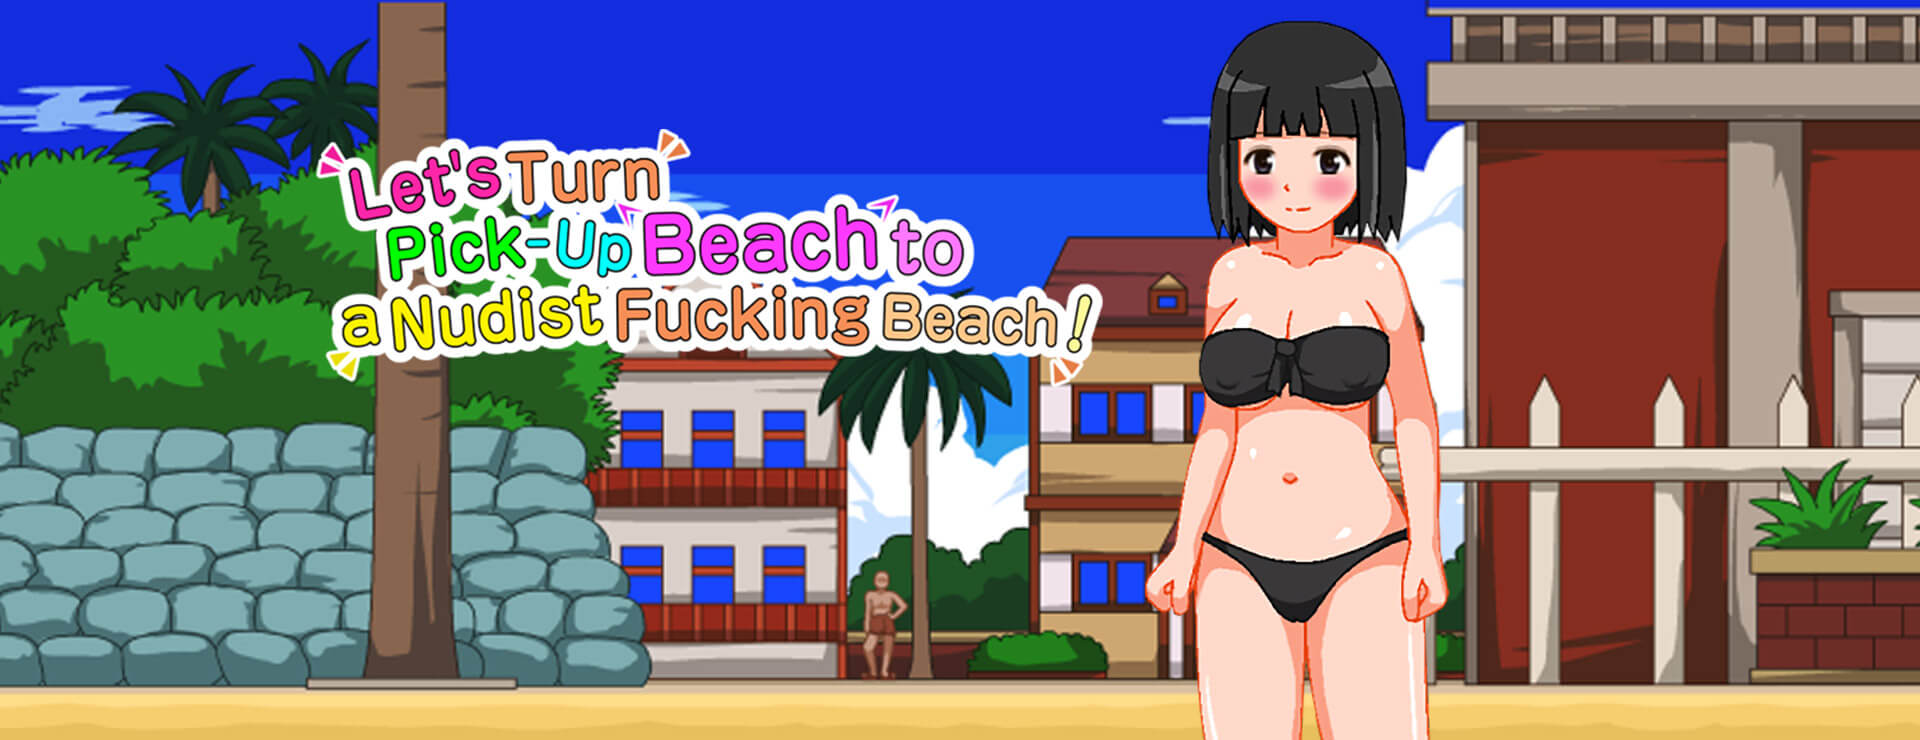 Let’s Turn Pick-Up Beach to a Nudist Fucking Beach!! - Simulación Juego